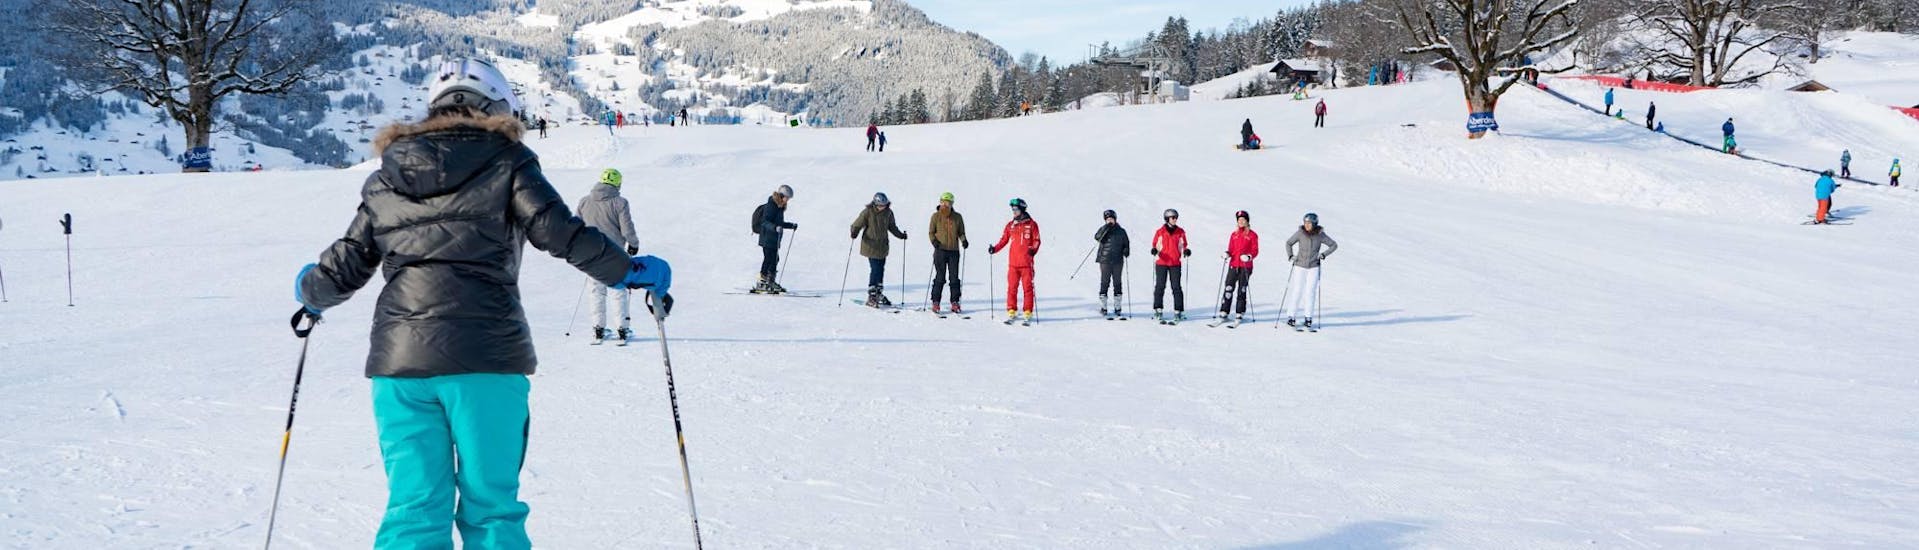 ski-lessons-beginner-package-first-timers-outdoor-interlaken2